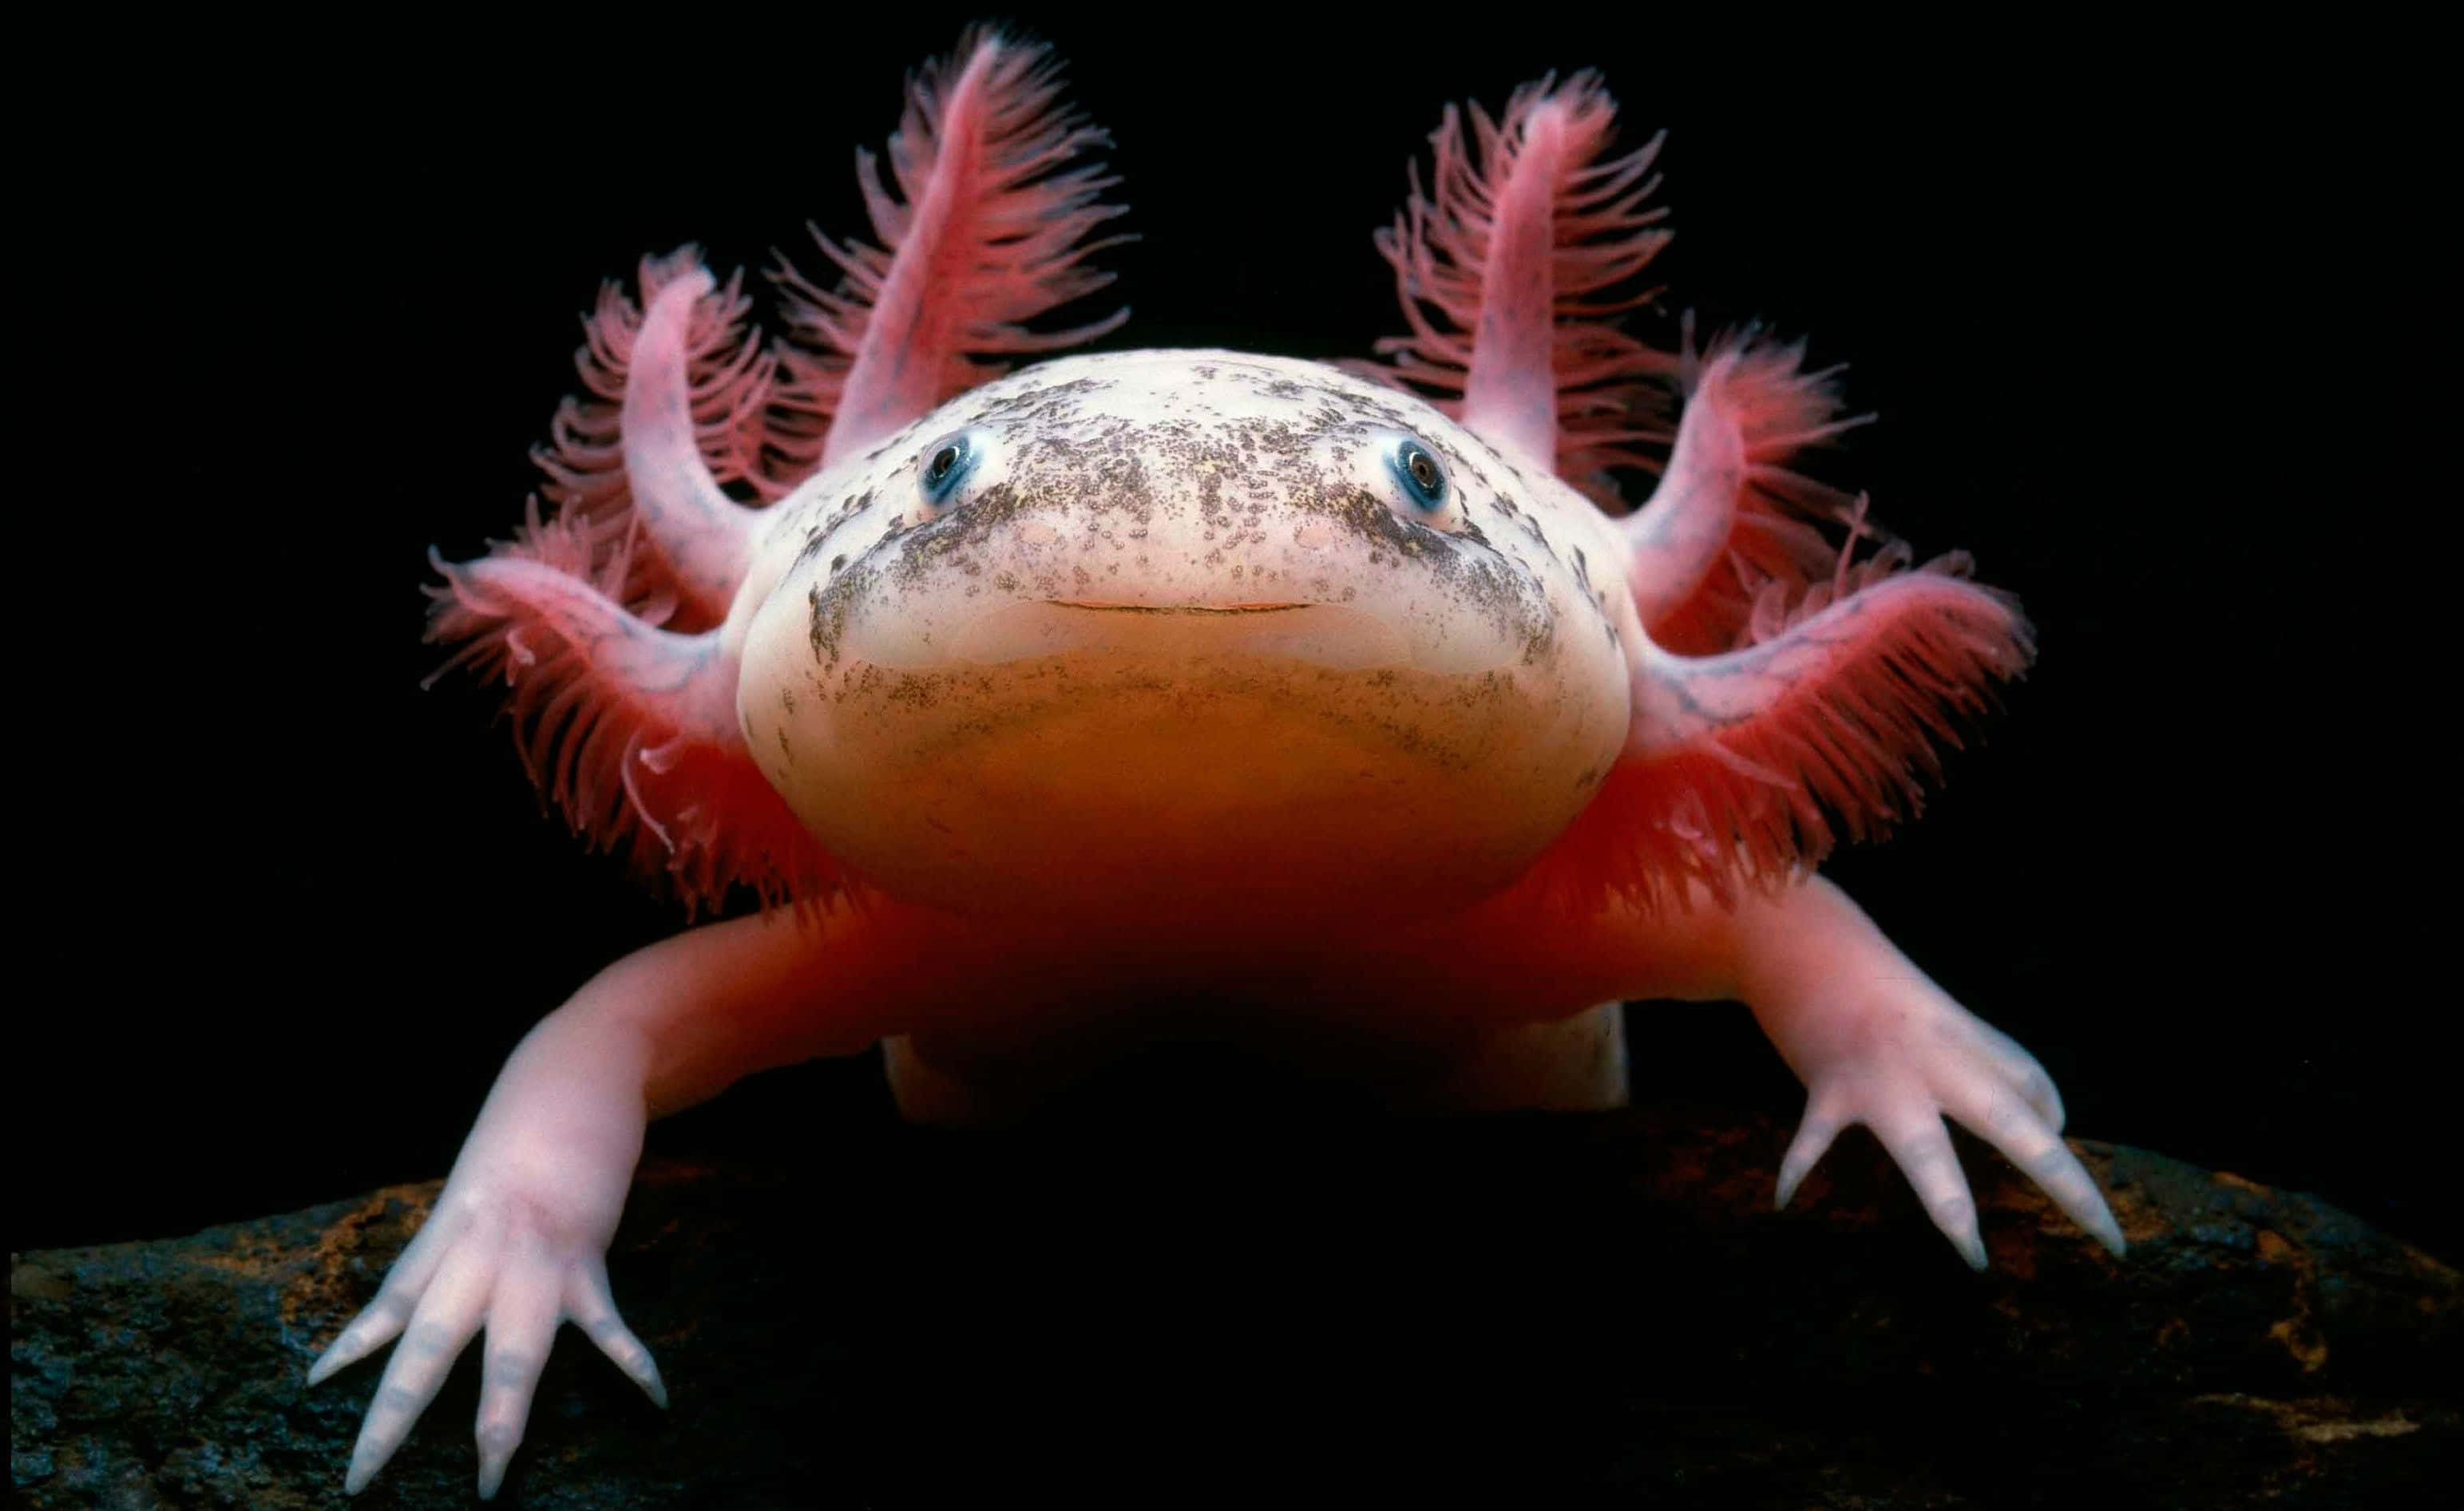 Caption: Captivating Close-up Of An Axolotl In A Freshwater Aquarium